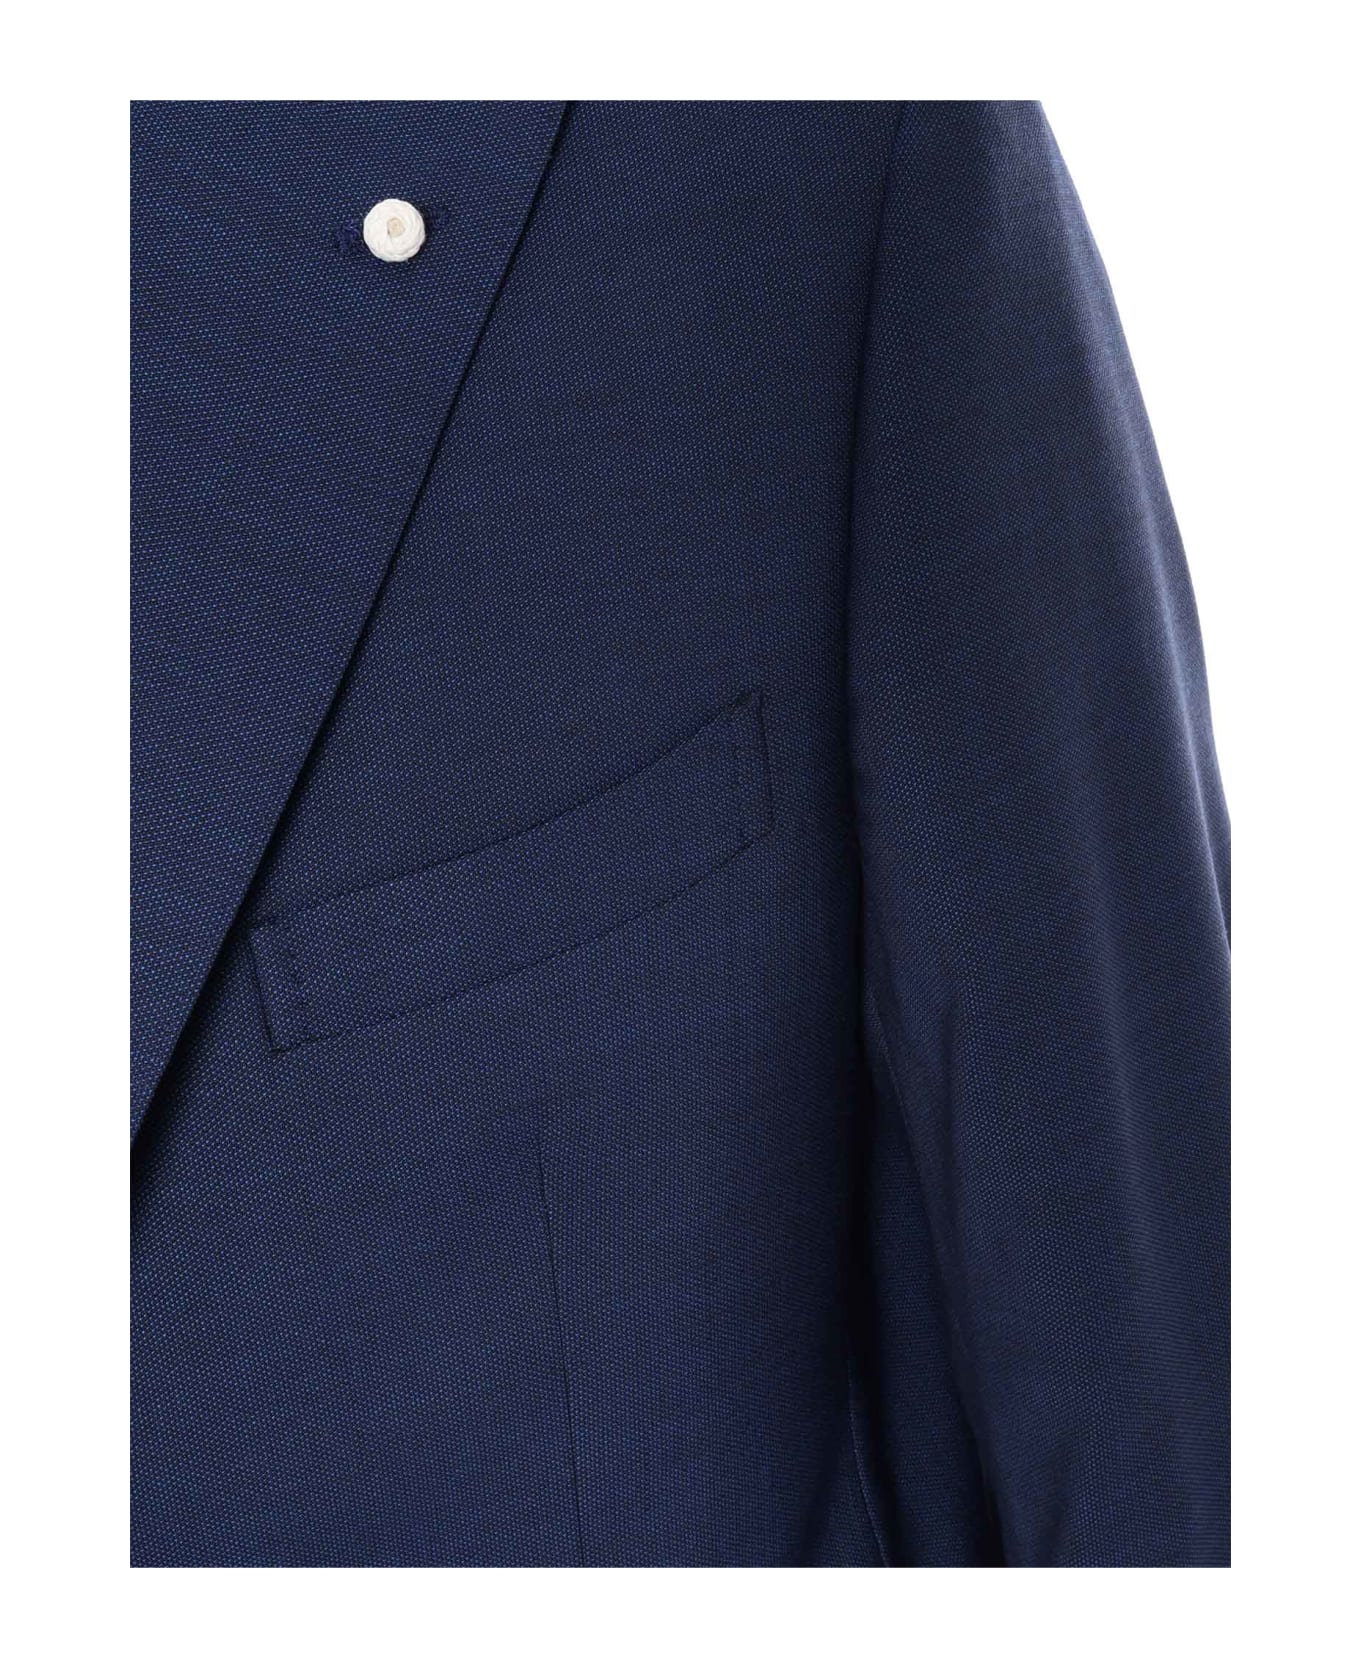 Luigi Bianchi Mantova Bright Blue Suit - BLUE スーツ